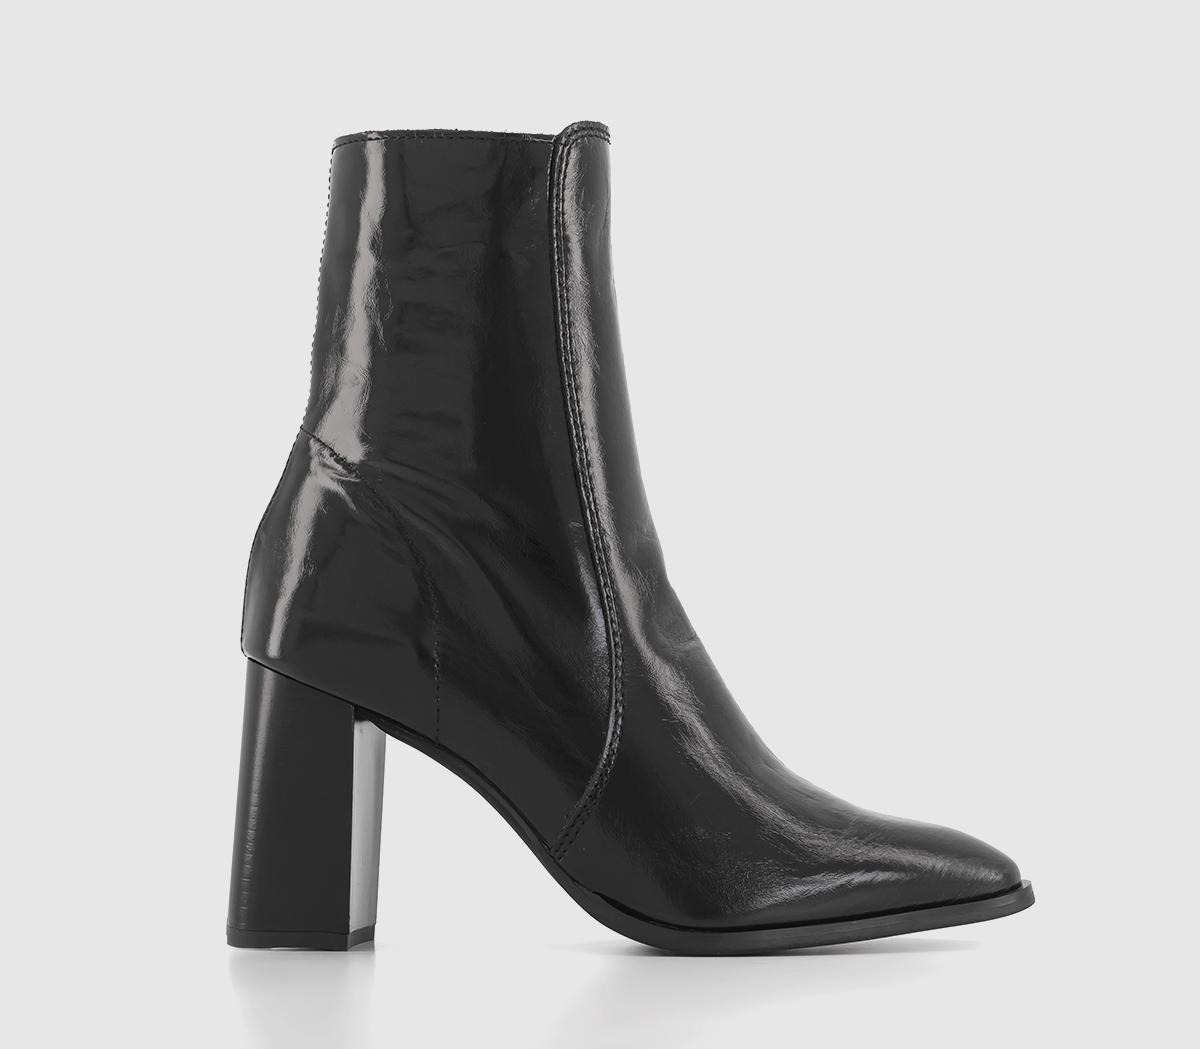 Allegra Block Heel Cheslea Boots Black Patent Leather